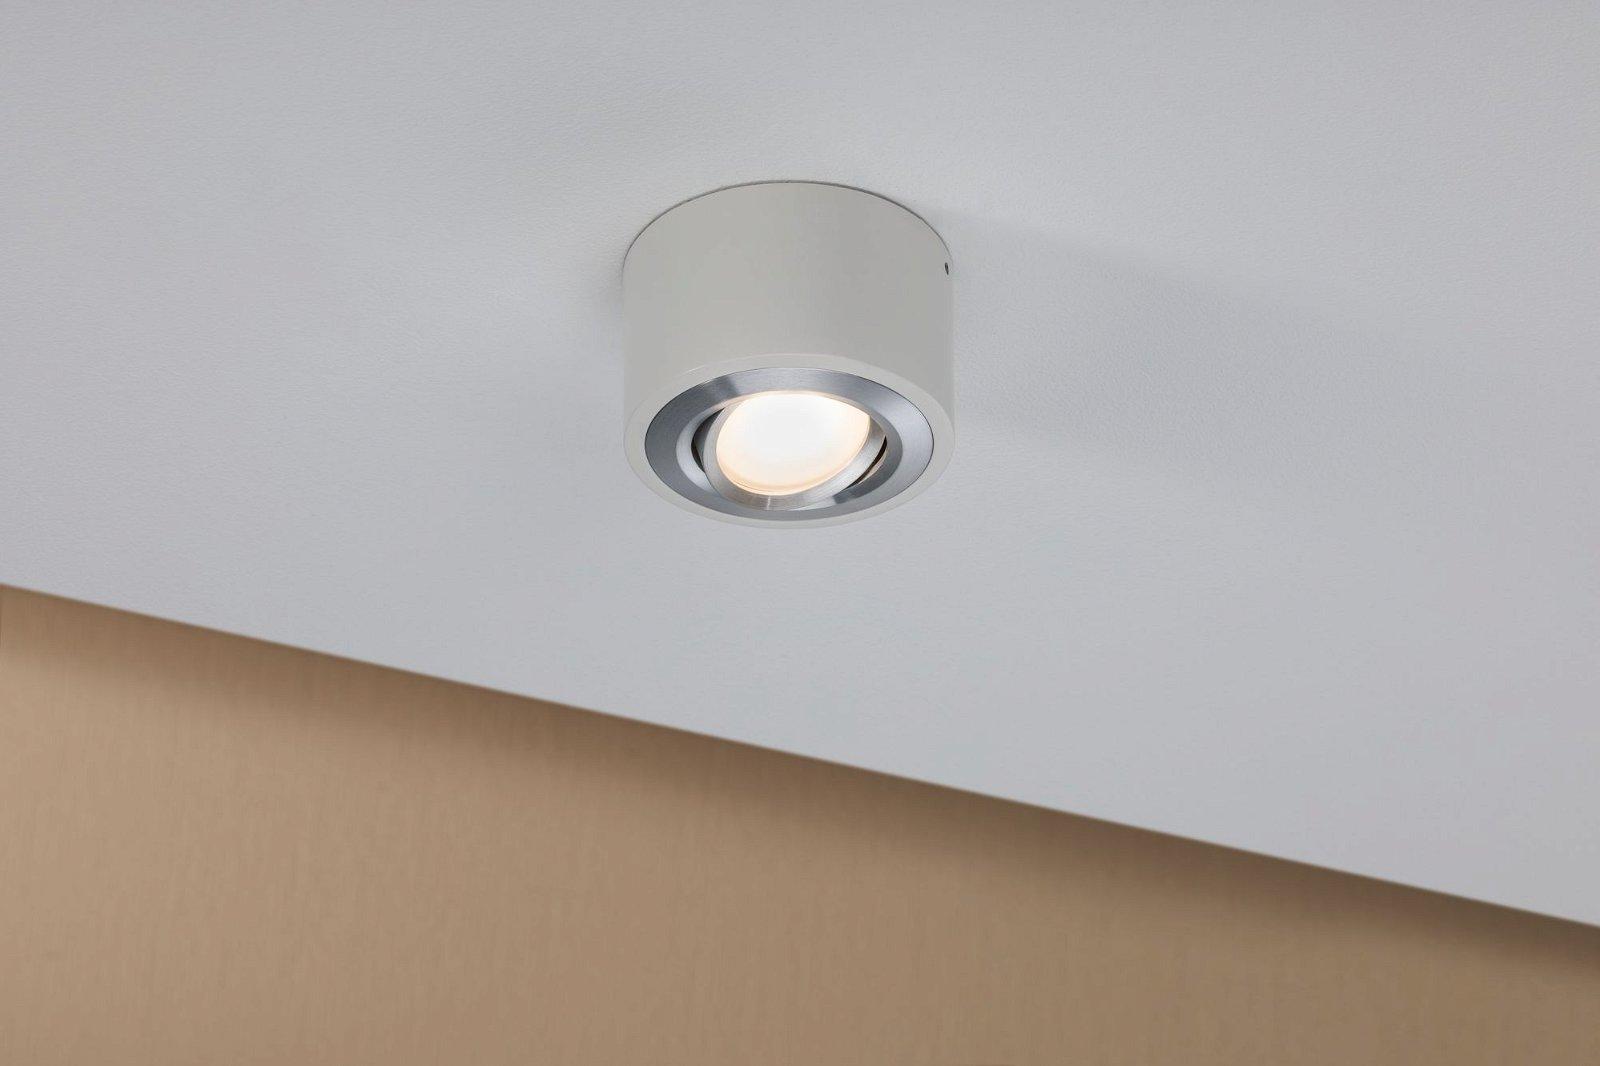 LED stropní svítidlo Argun 1-ramenné 4,8W bílá mat/hliník kartáčovaný - PAULMANN